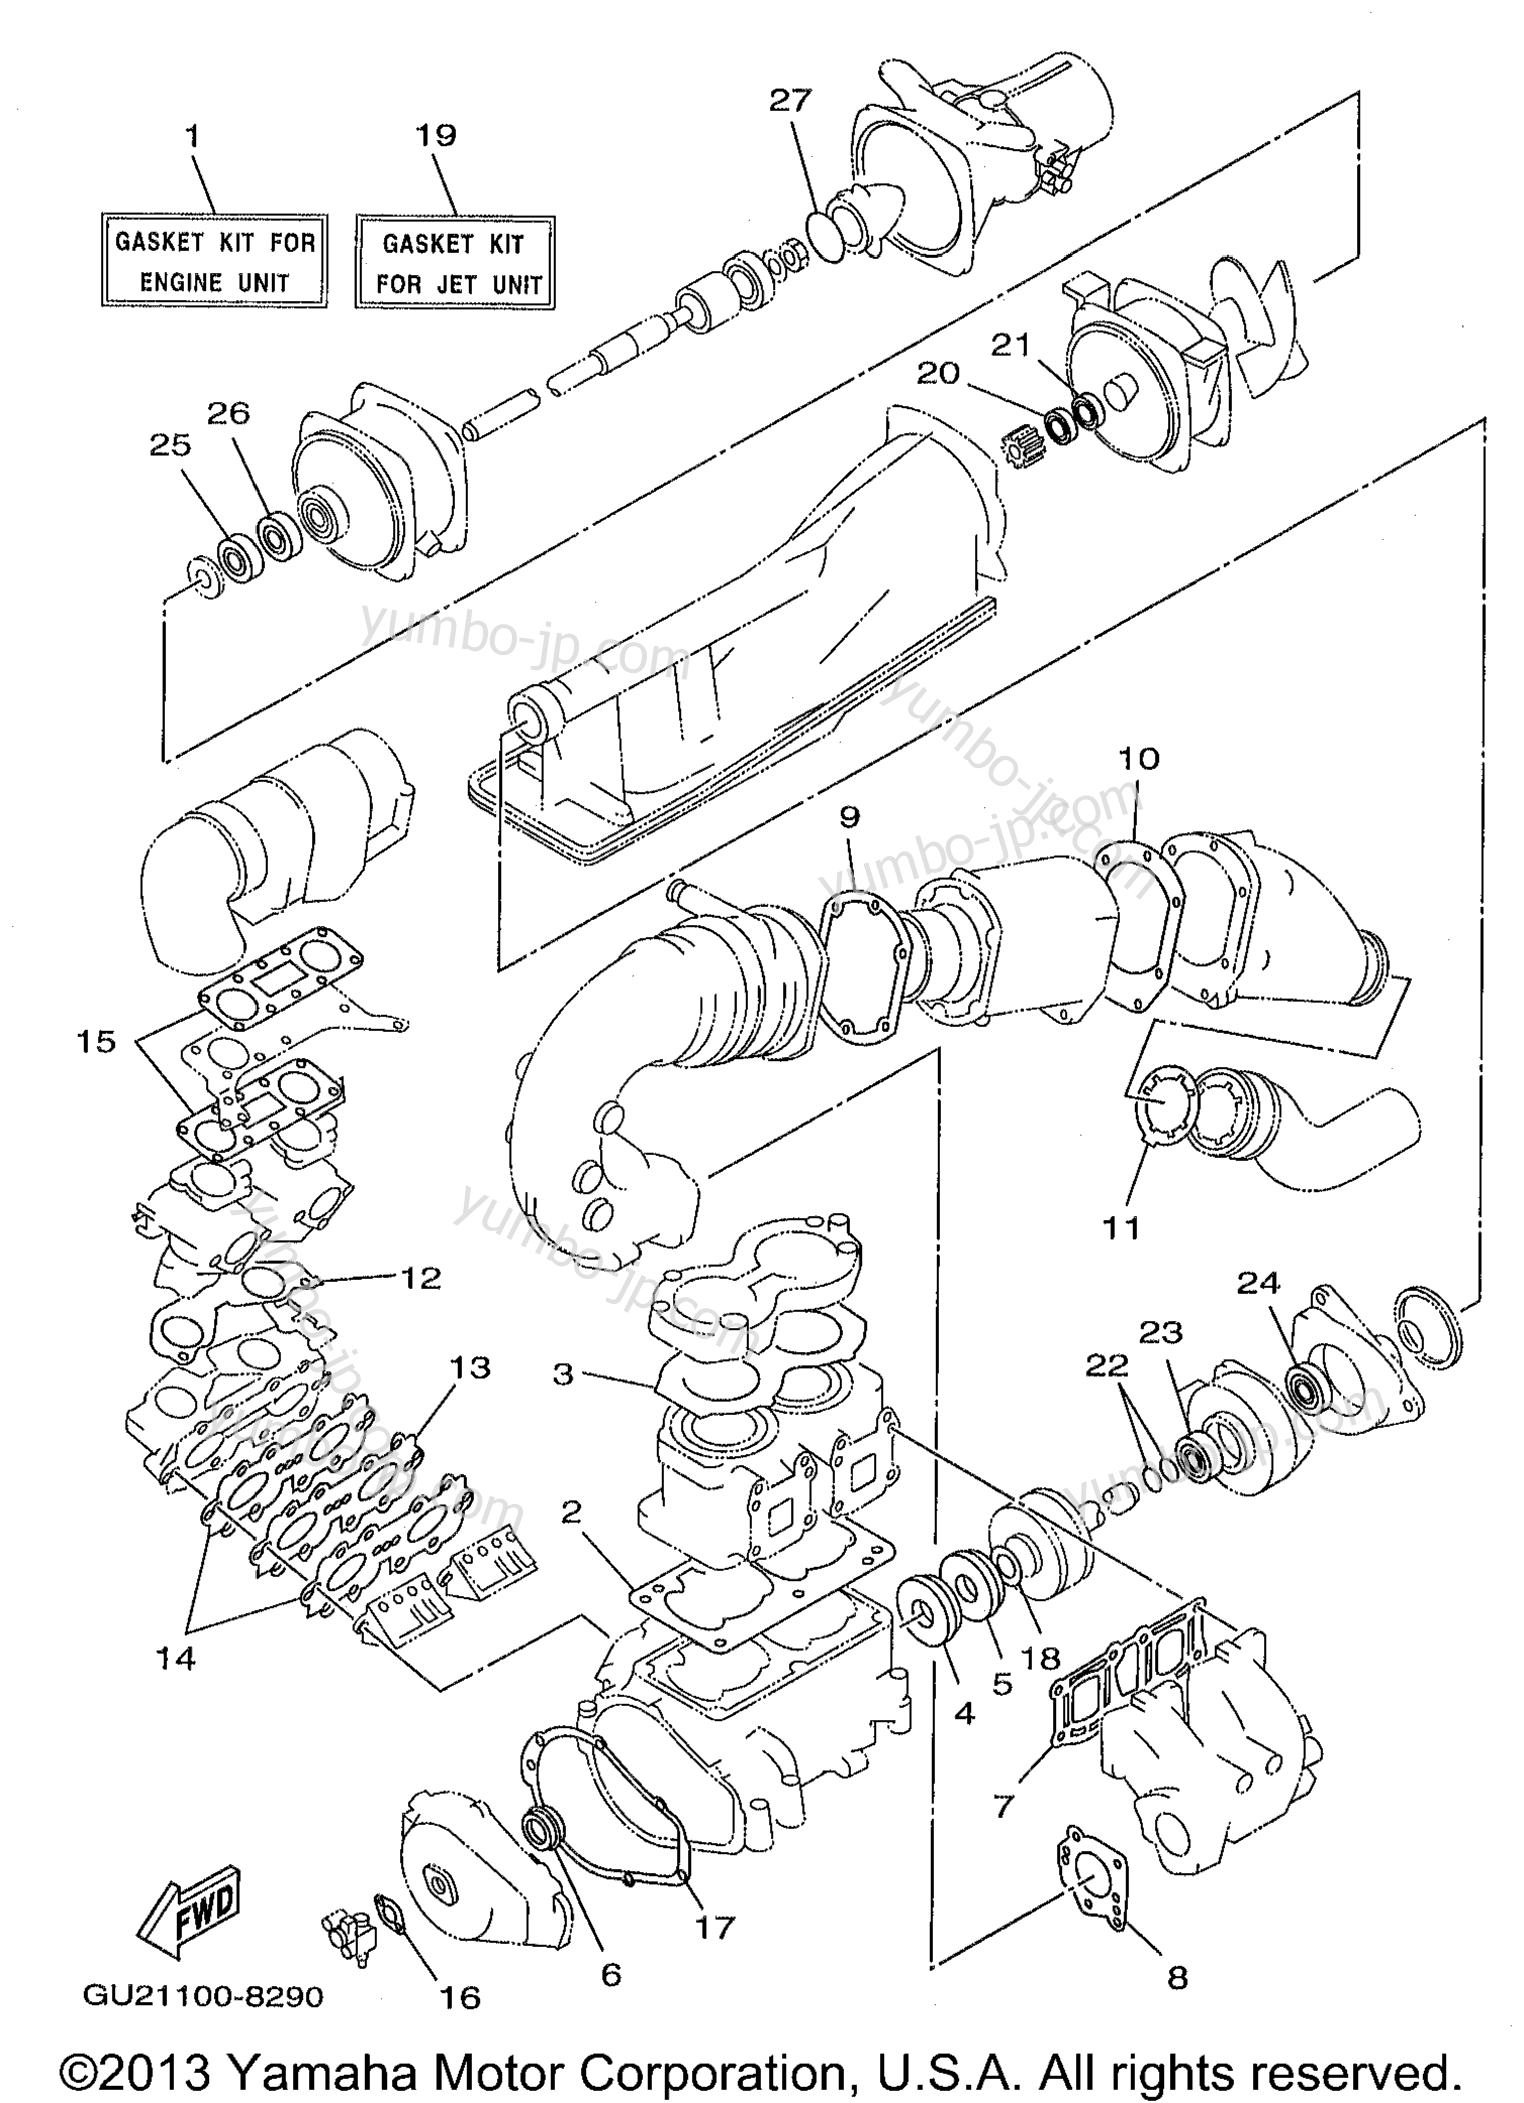 Repair Kit 1 для гидроциклов YAMAHA WAVE RUNNER XL760 (XL760W) 1998 г.